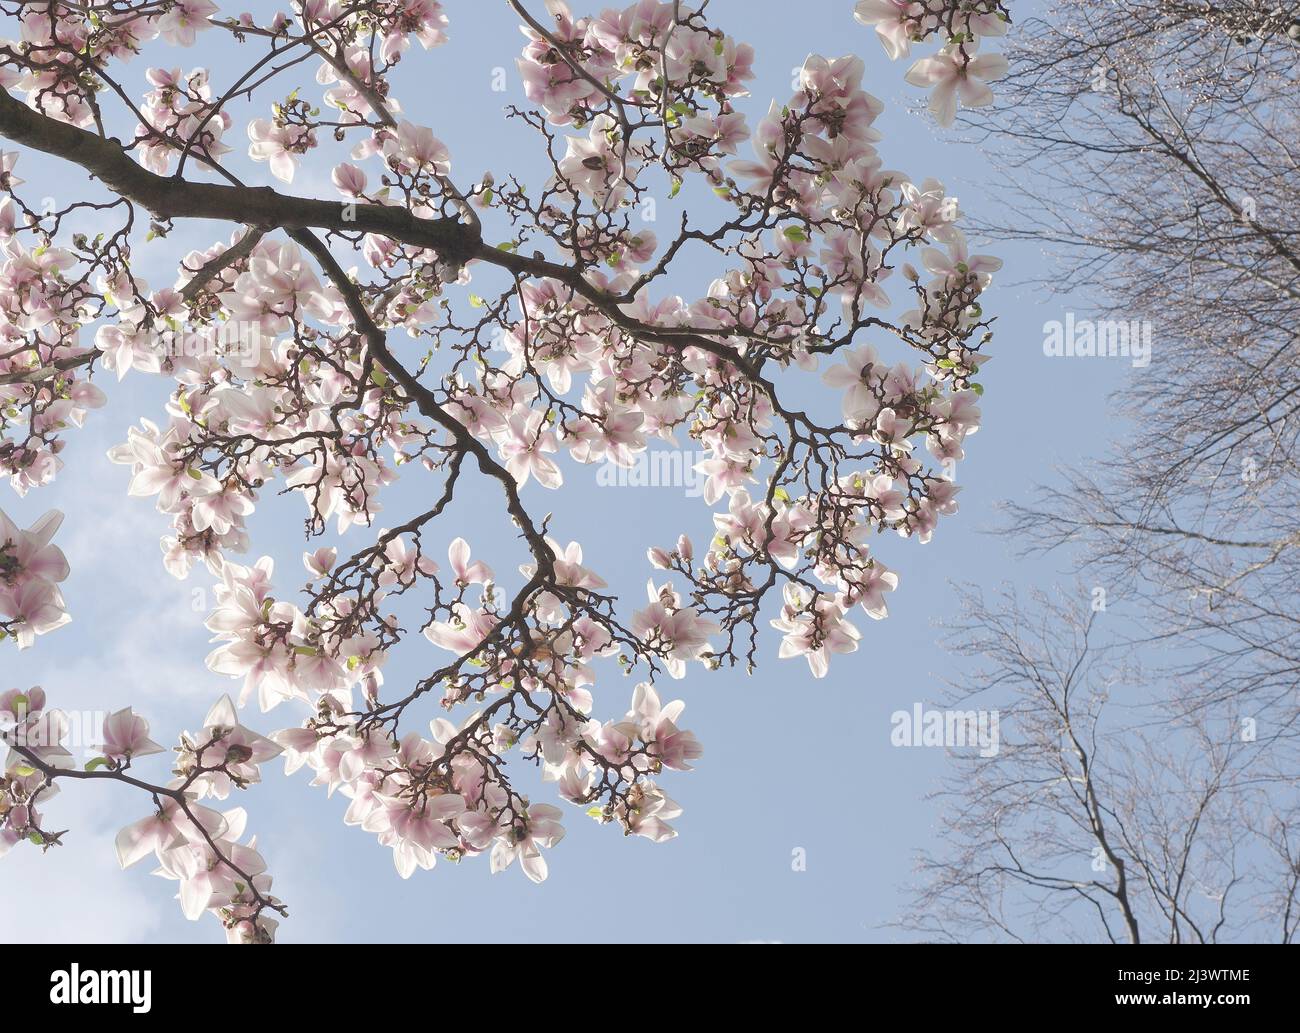 Blooming magnolia tree viewed from below Stock Photo